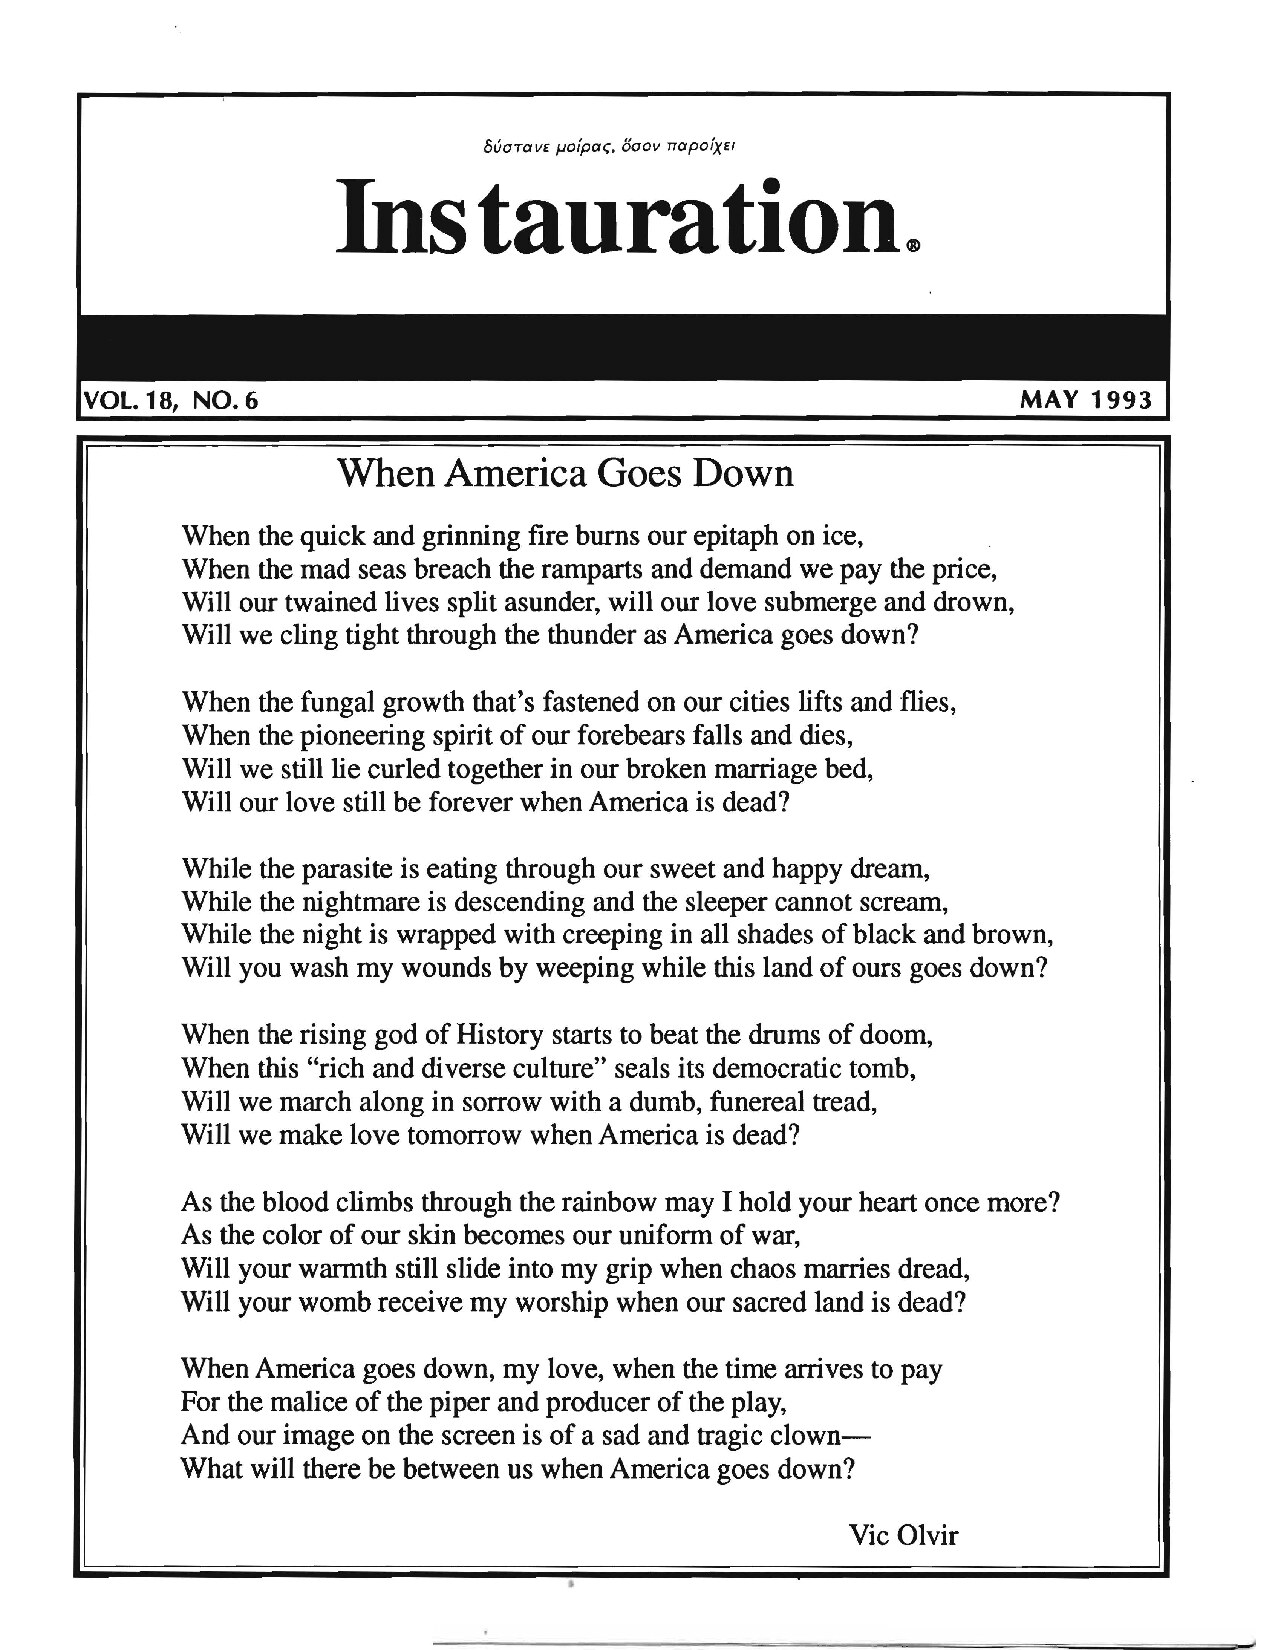 Instauration-1993-05-May-Vol18-No6